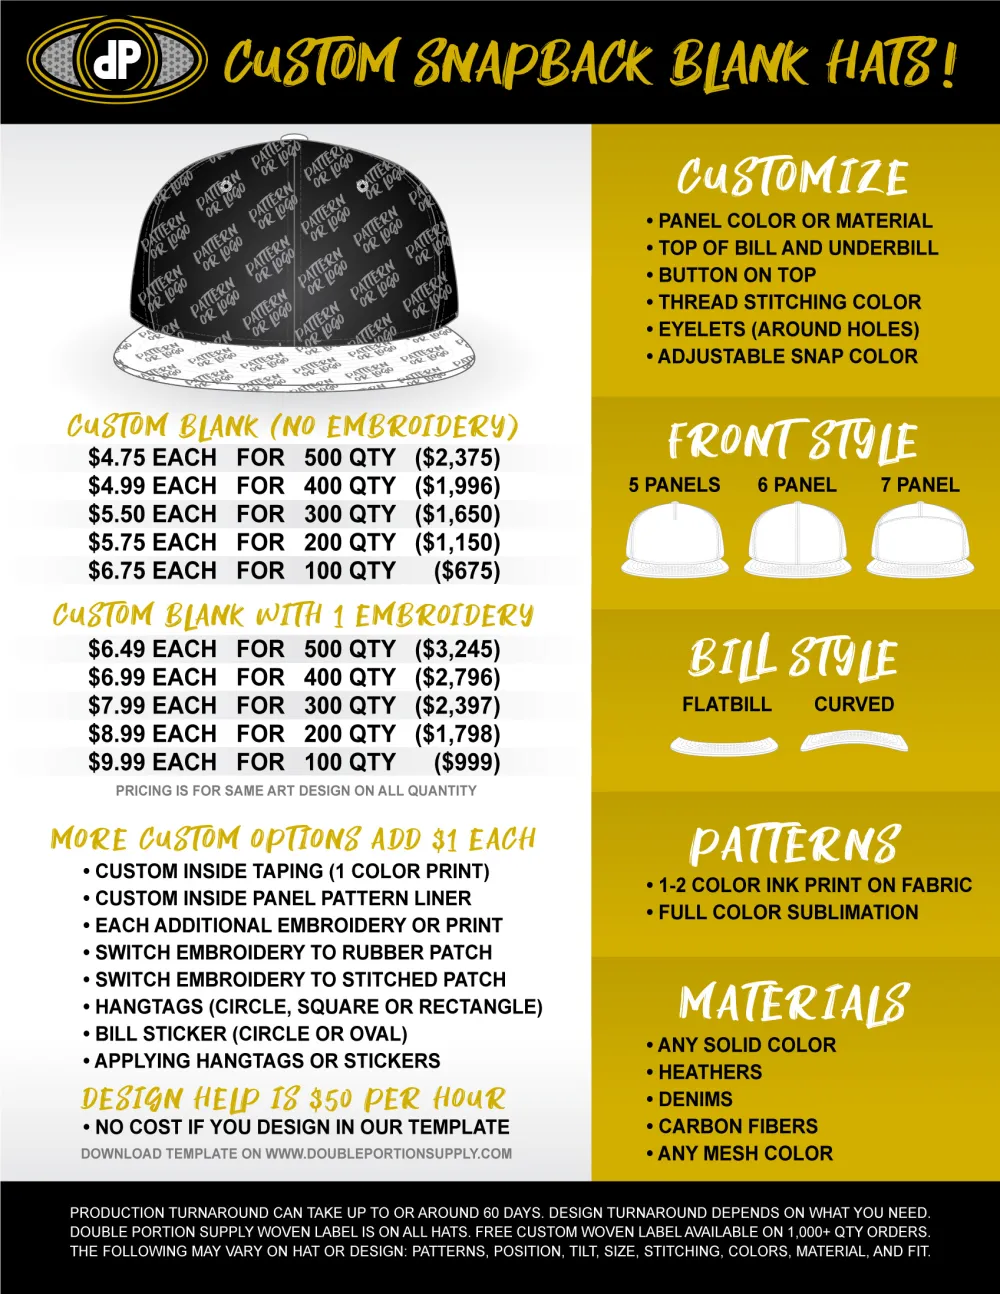 Custom-Snapback-Blank-Hats-Pricing-1